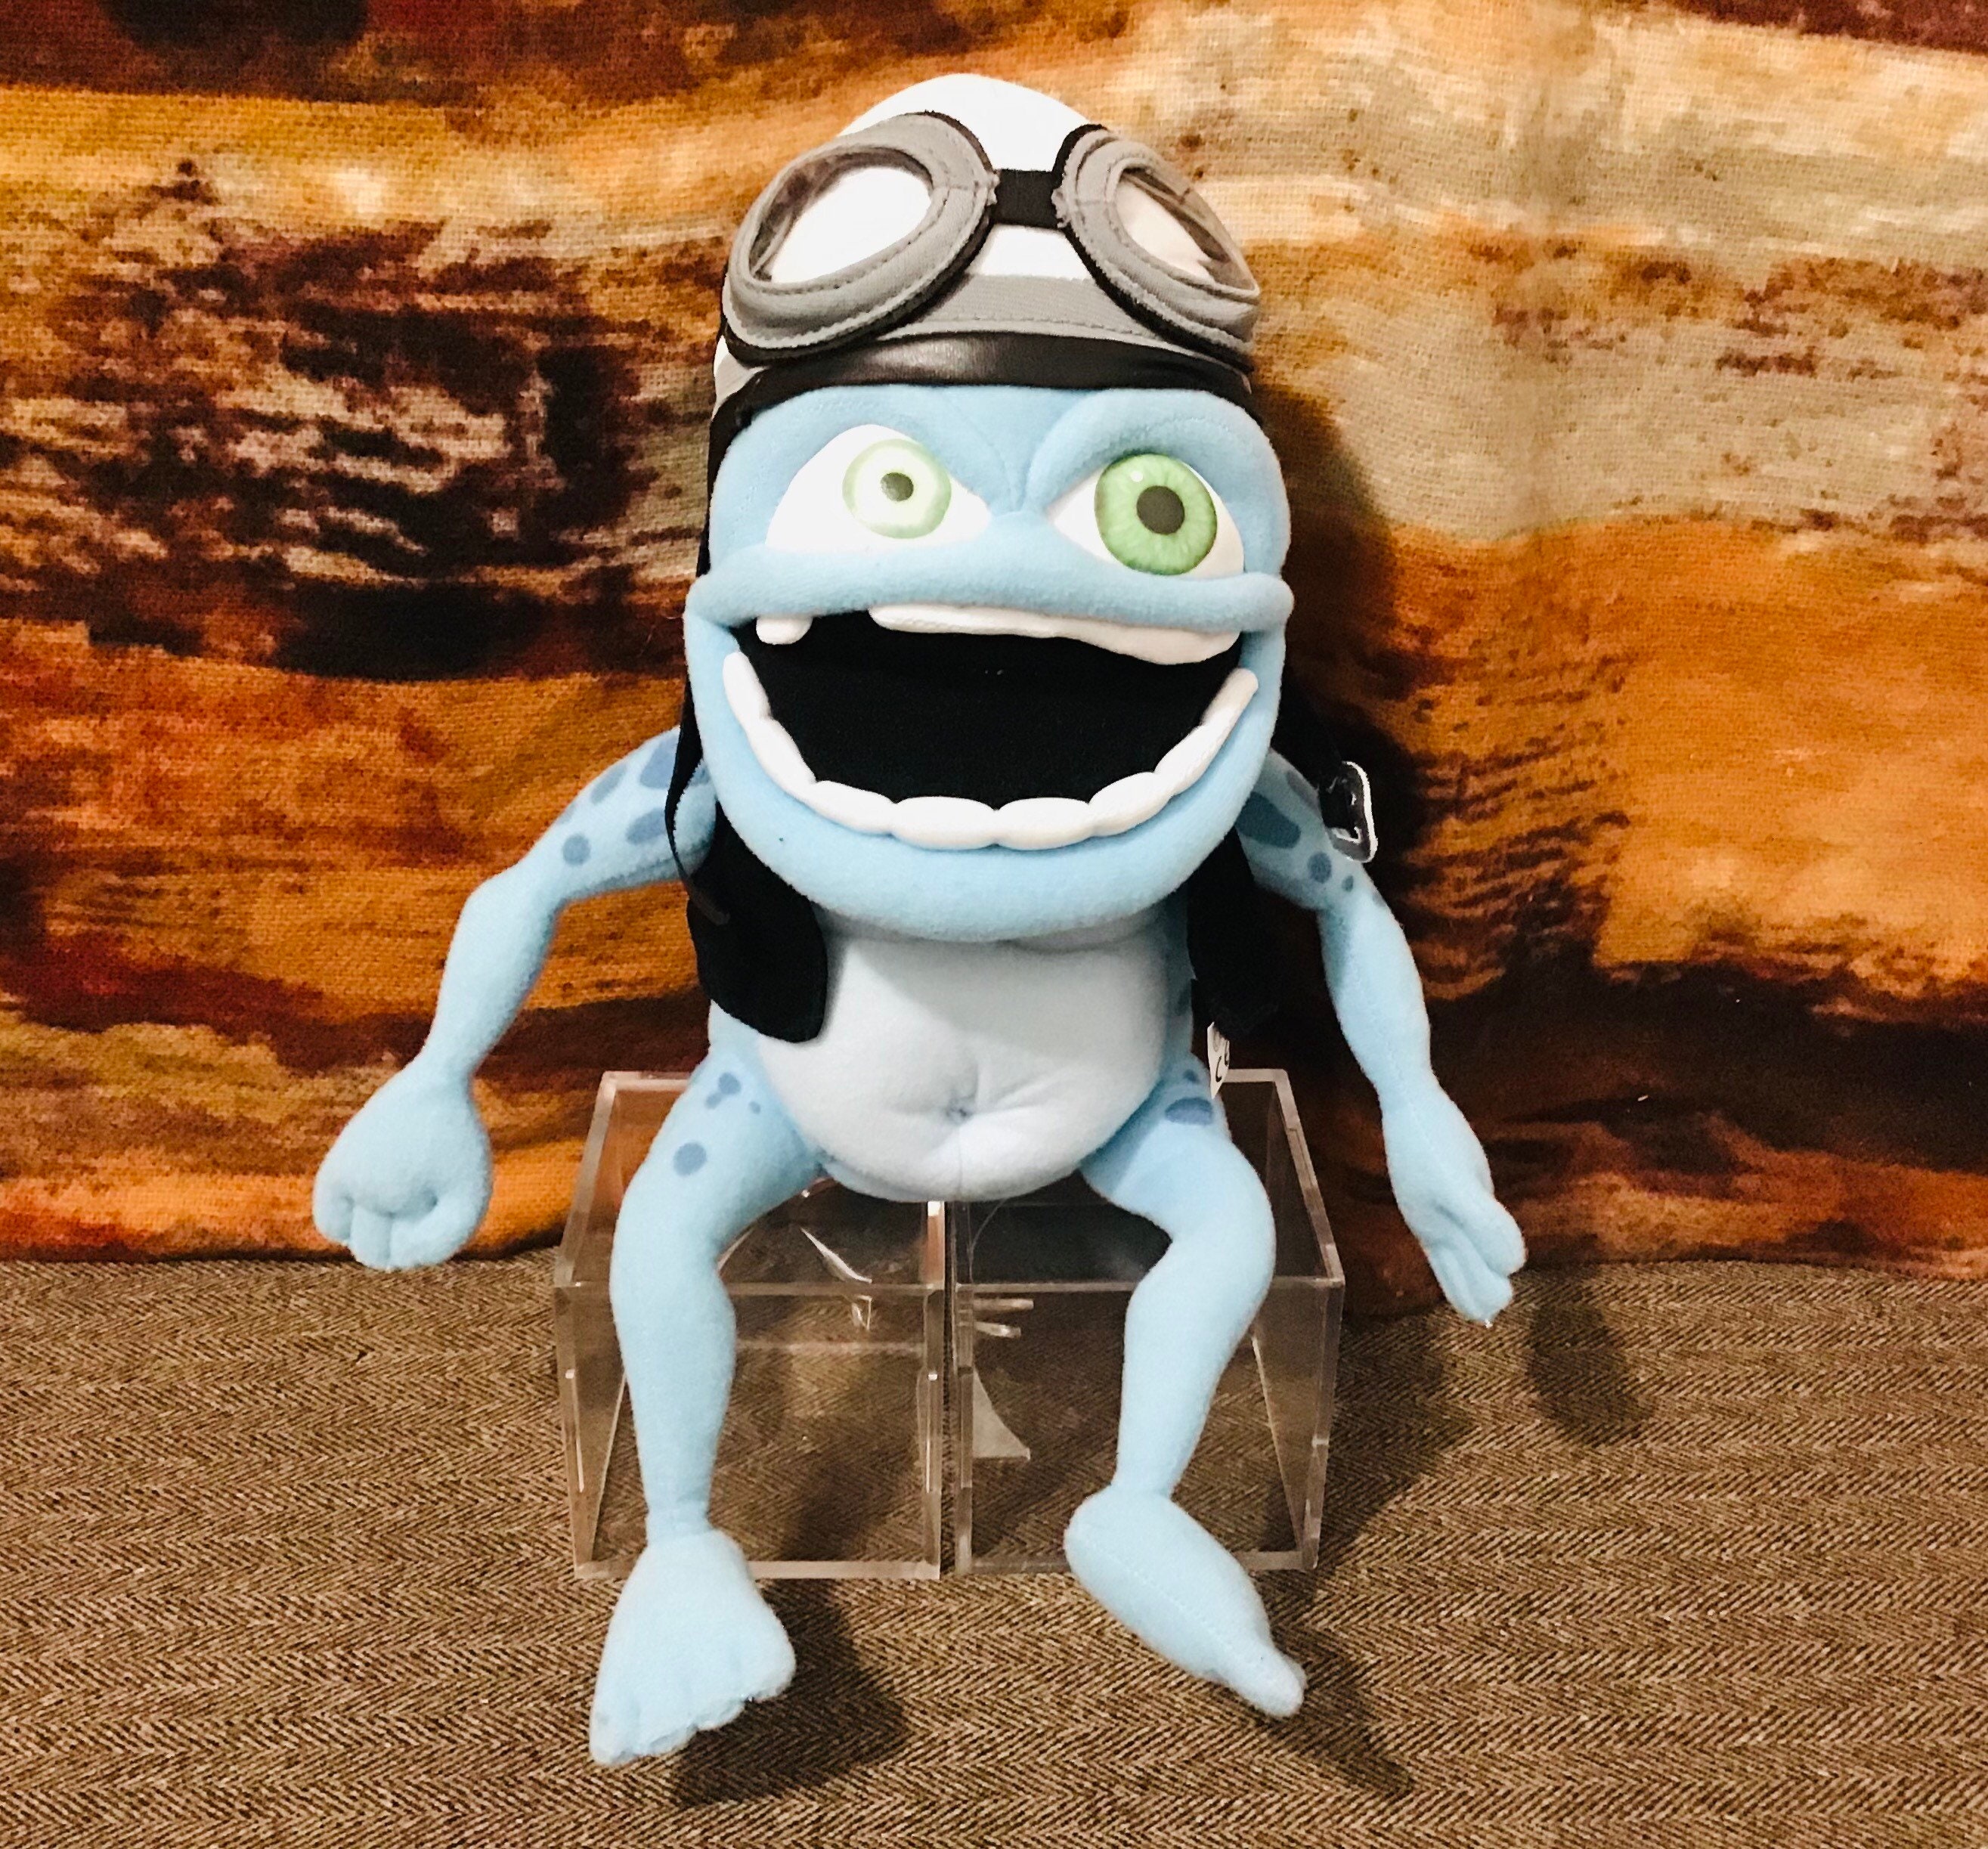 Crazy frog costume